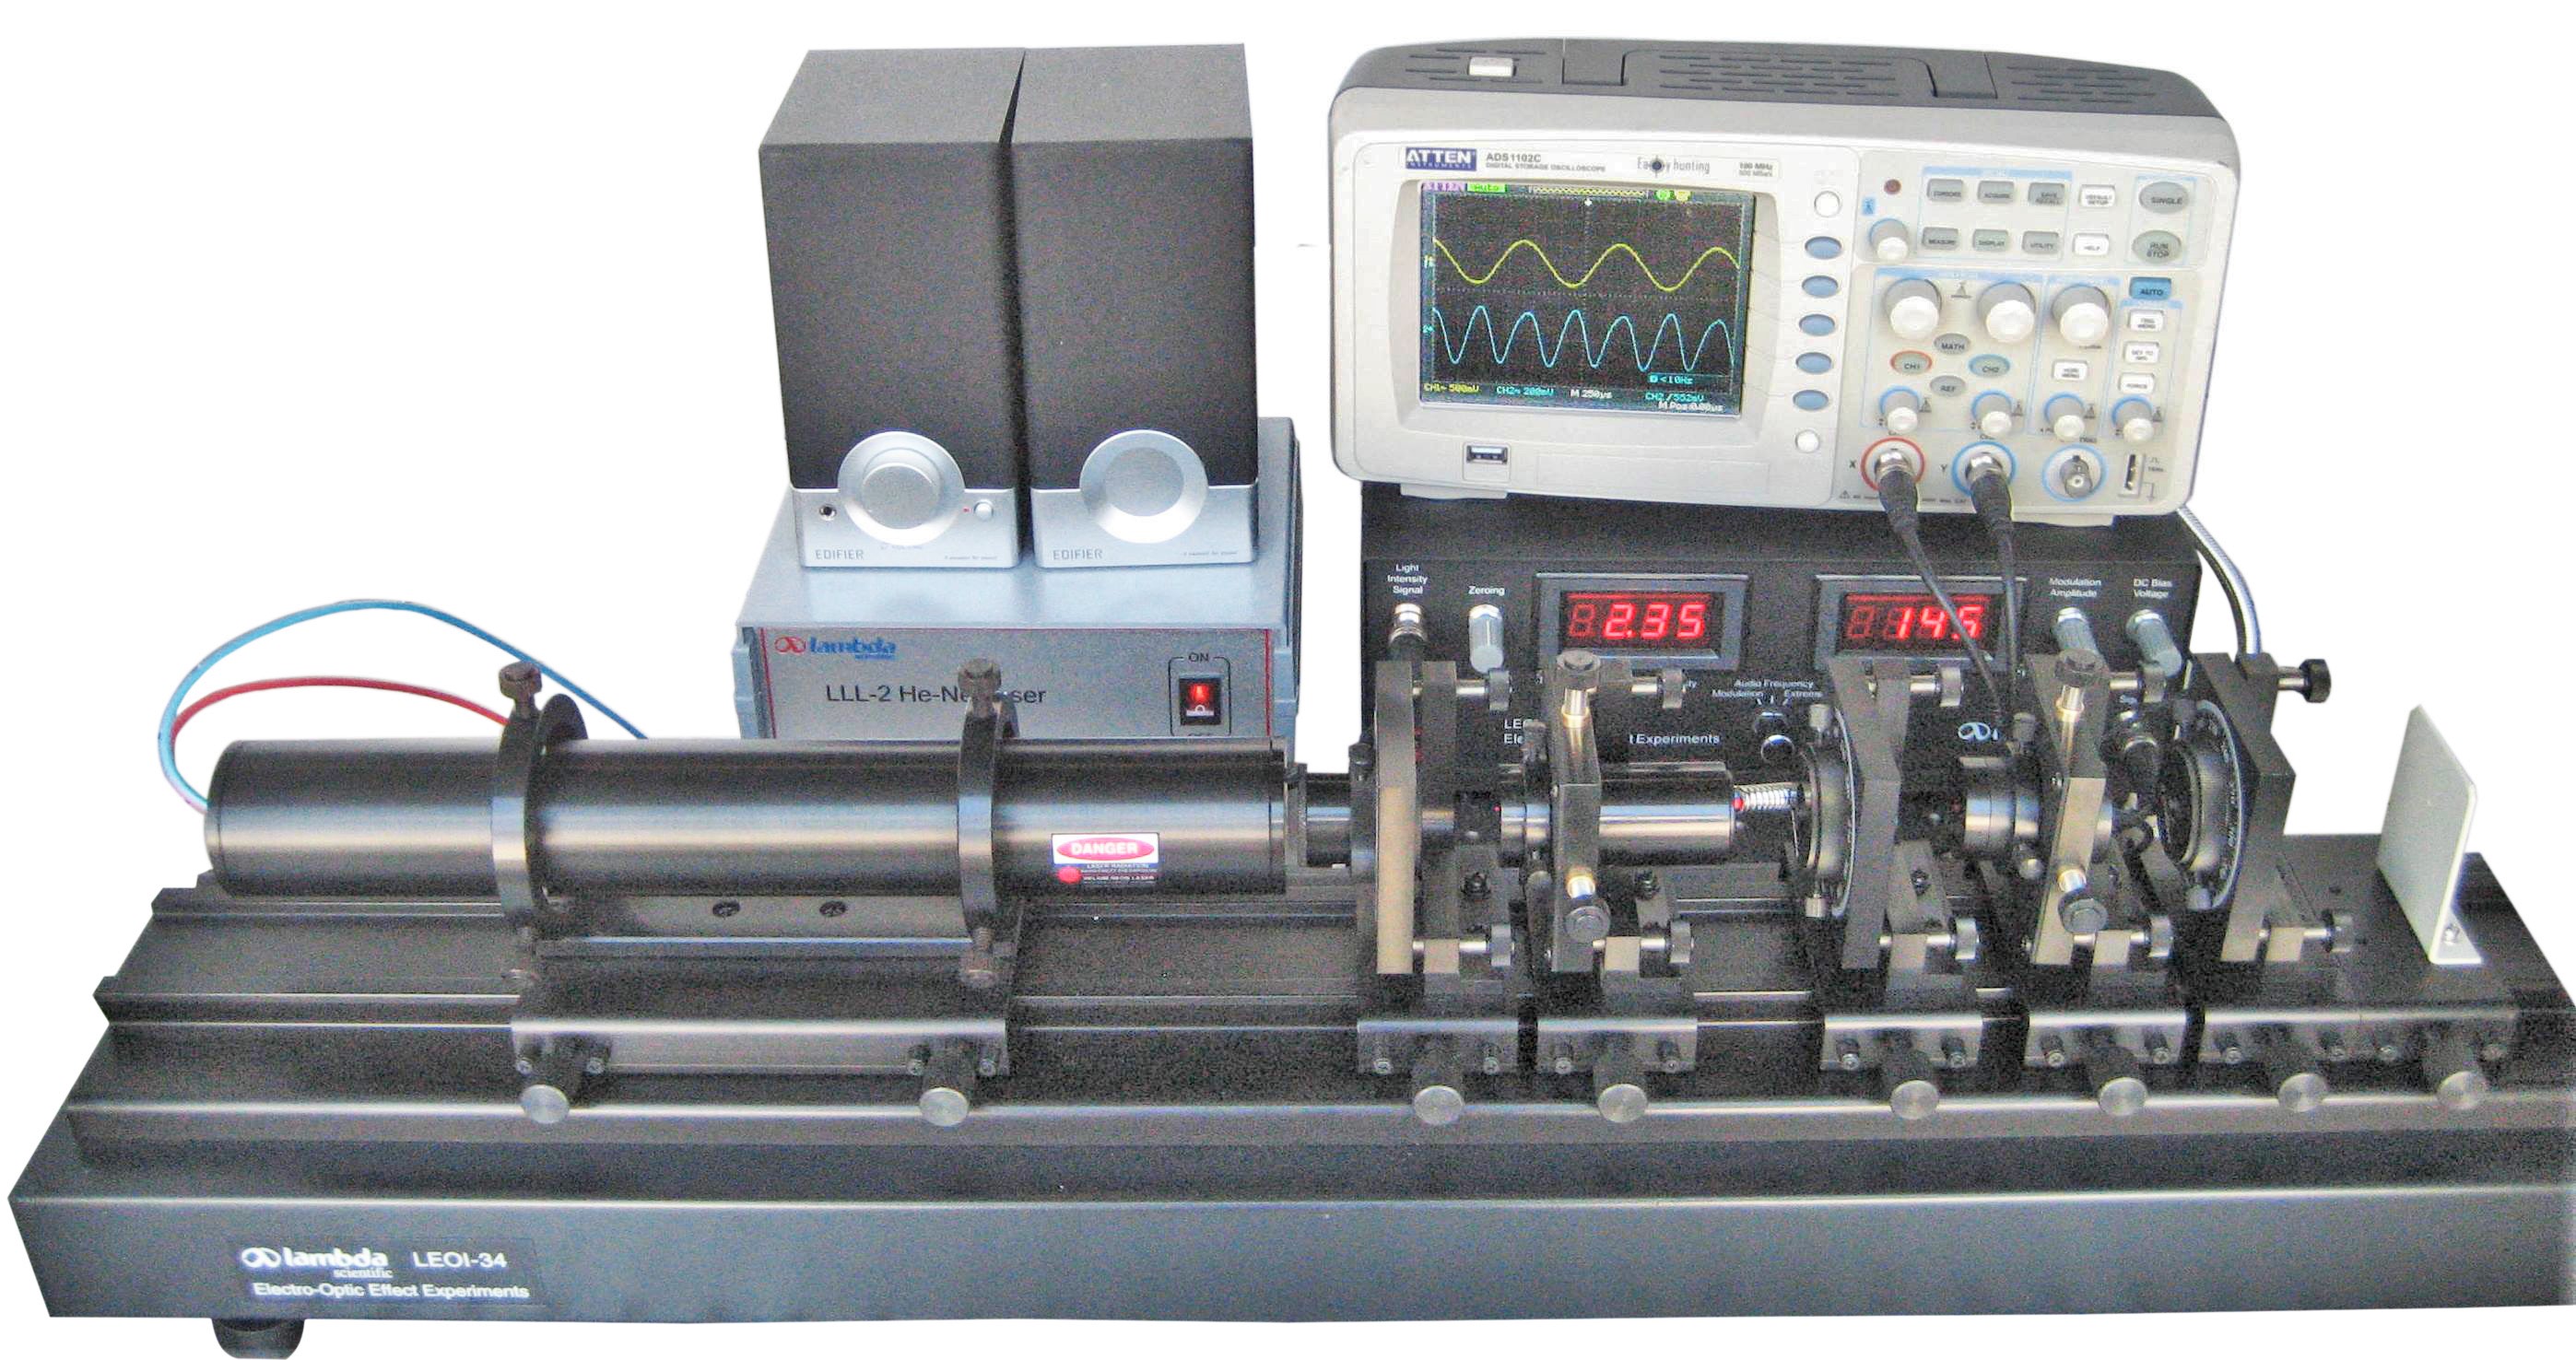 LEOI-34 Experimental System for Electro-Optic Modulation